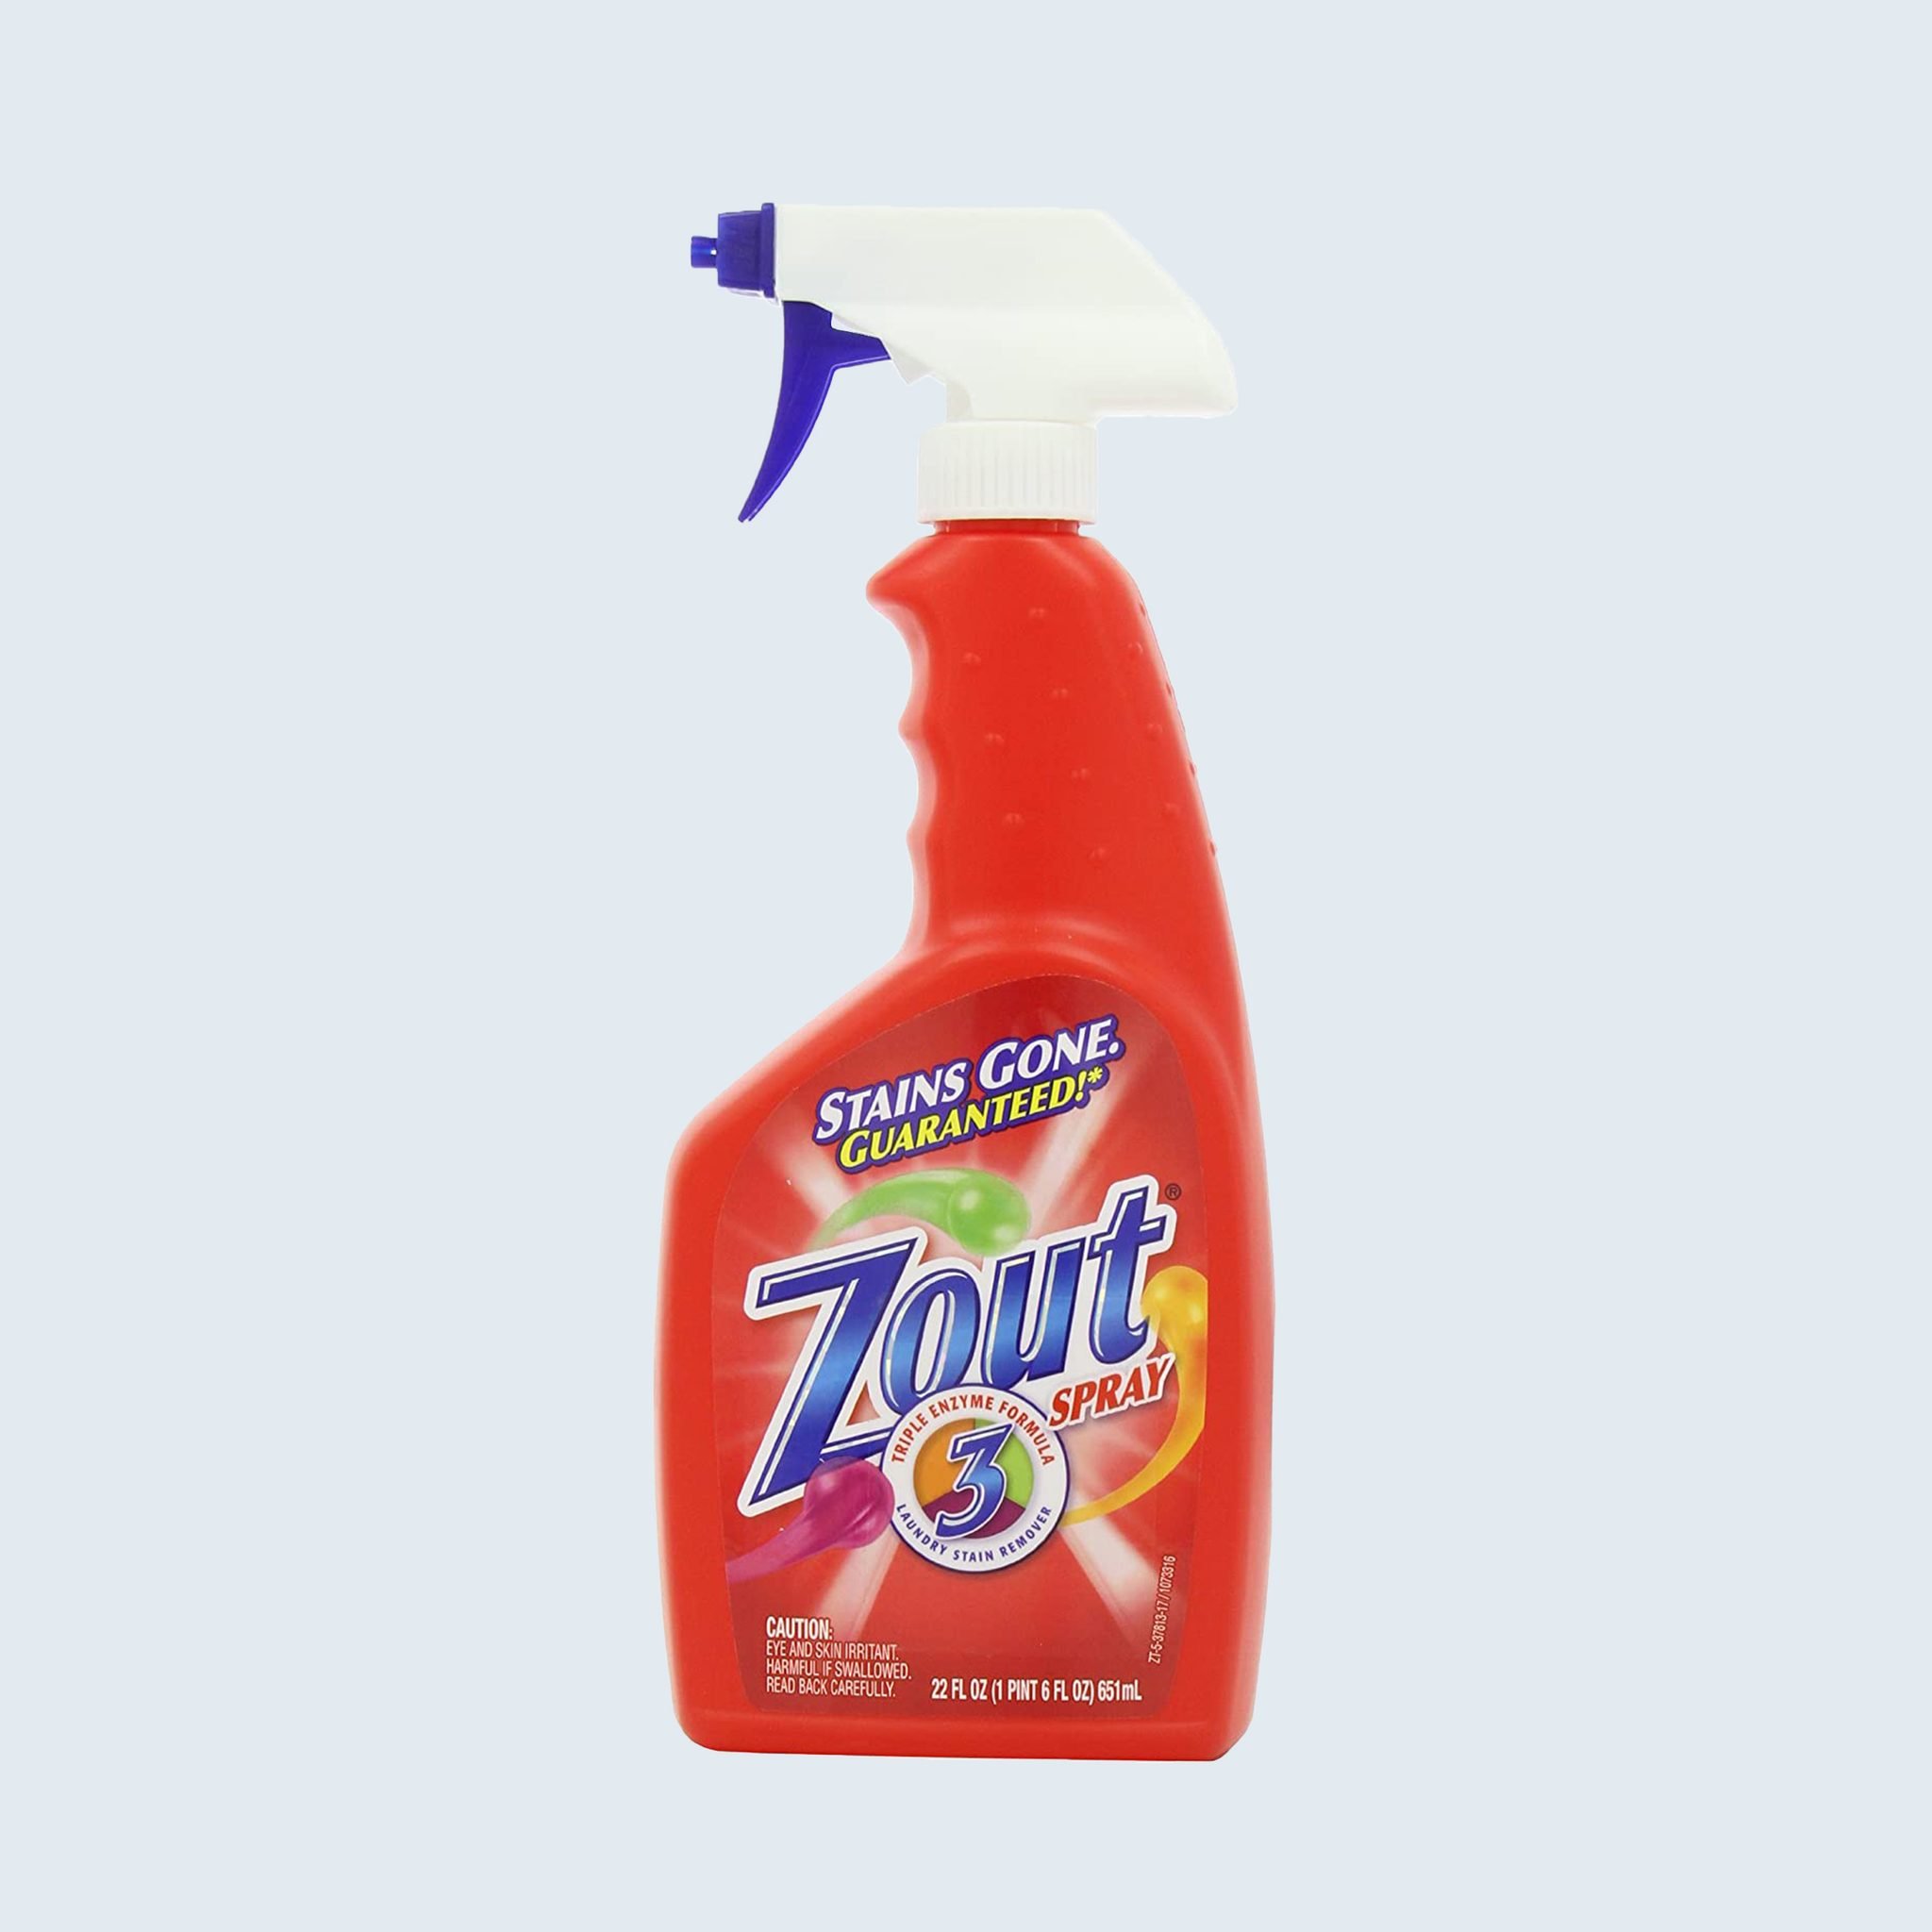 Zout Laundry Stain Remover Spray Via Amazon.com  ?resize=2048